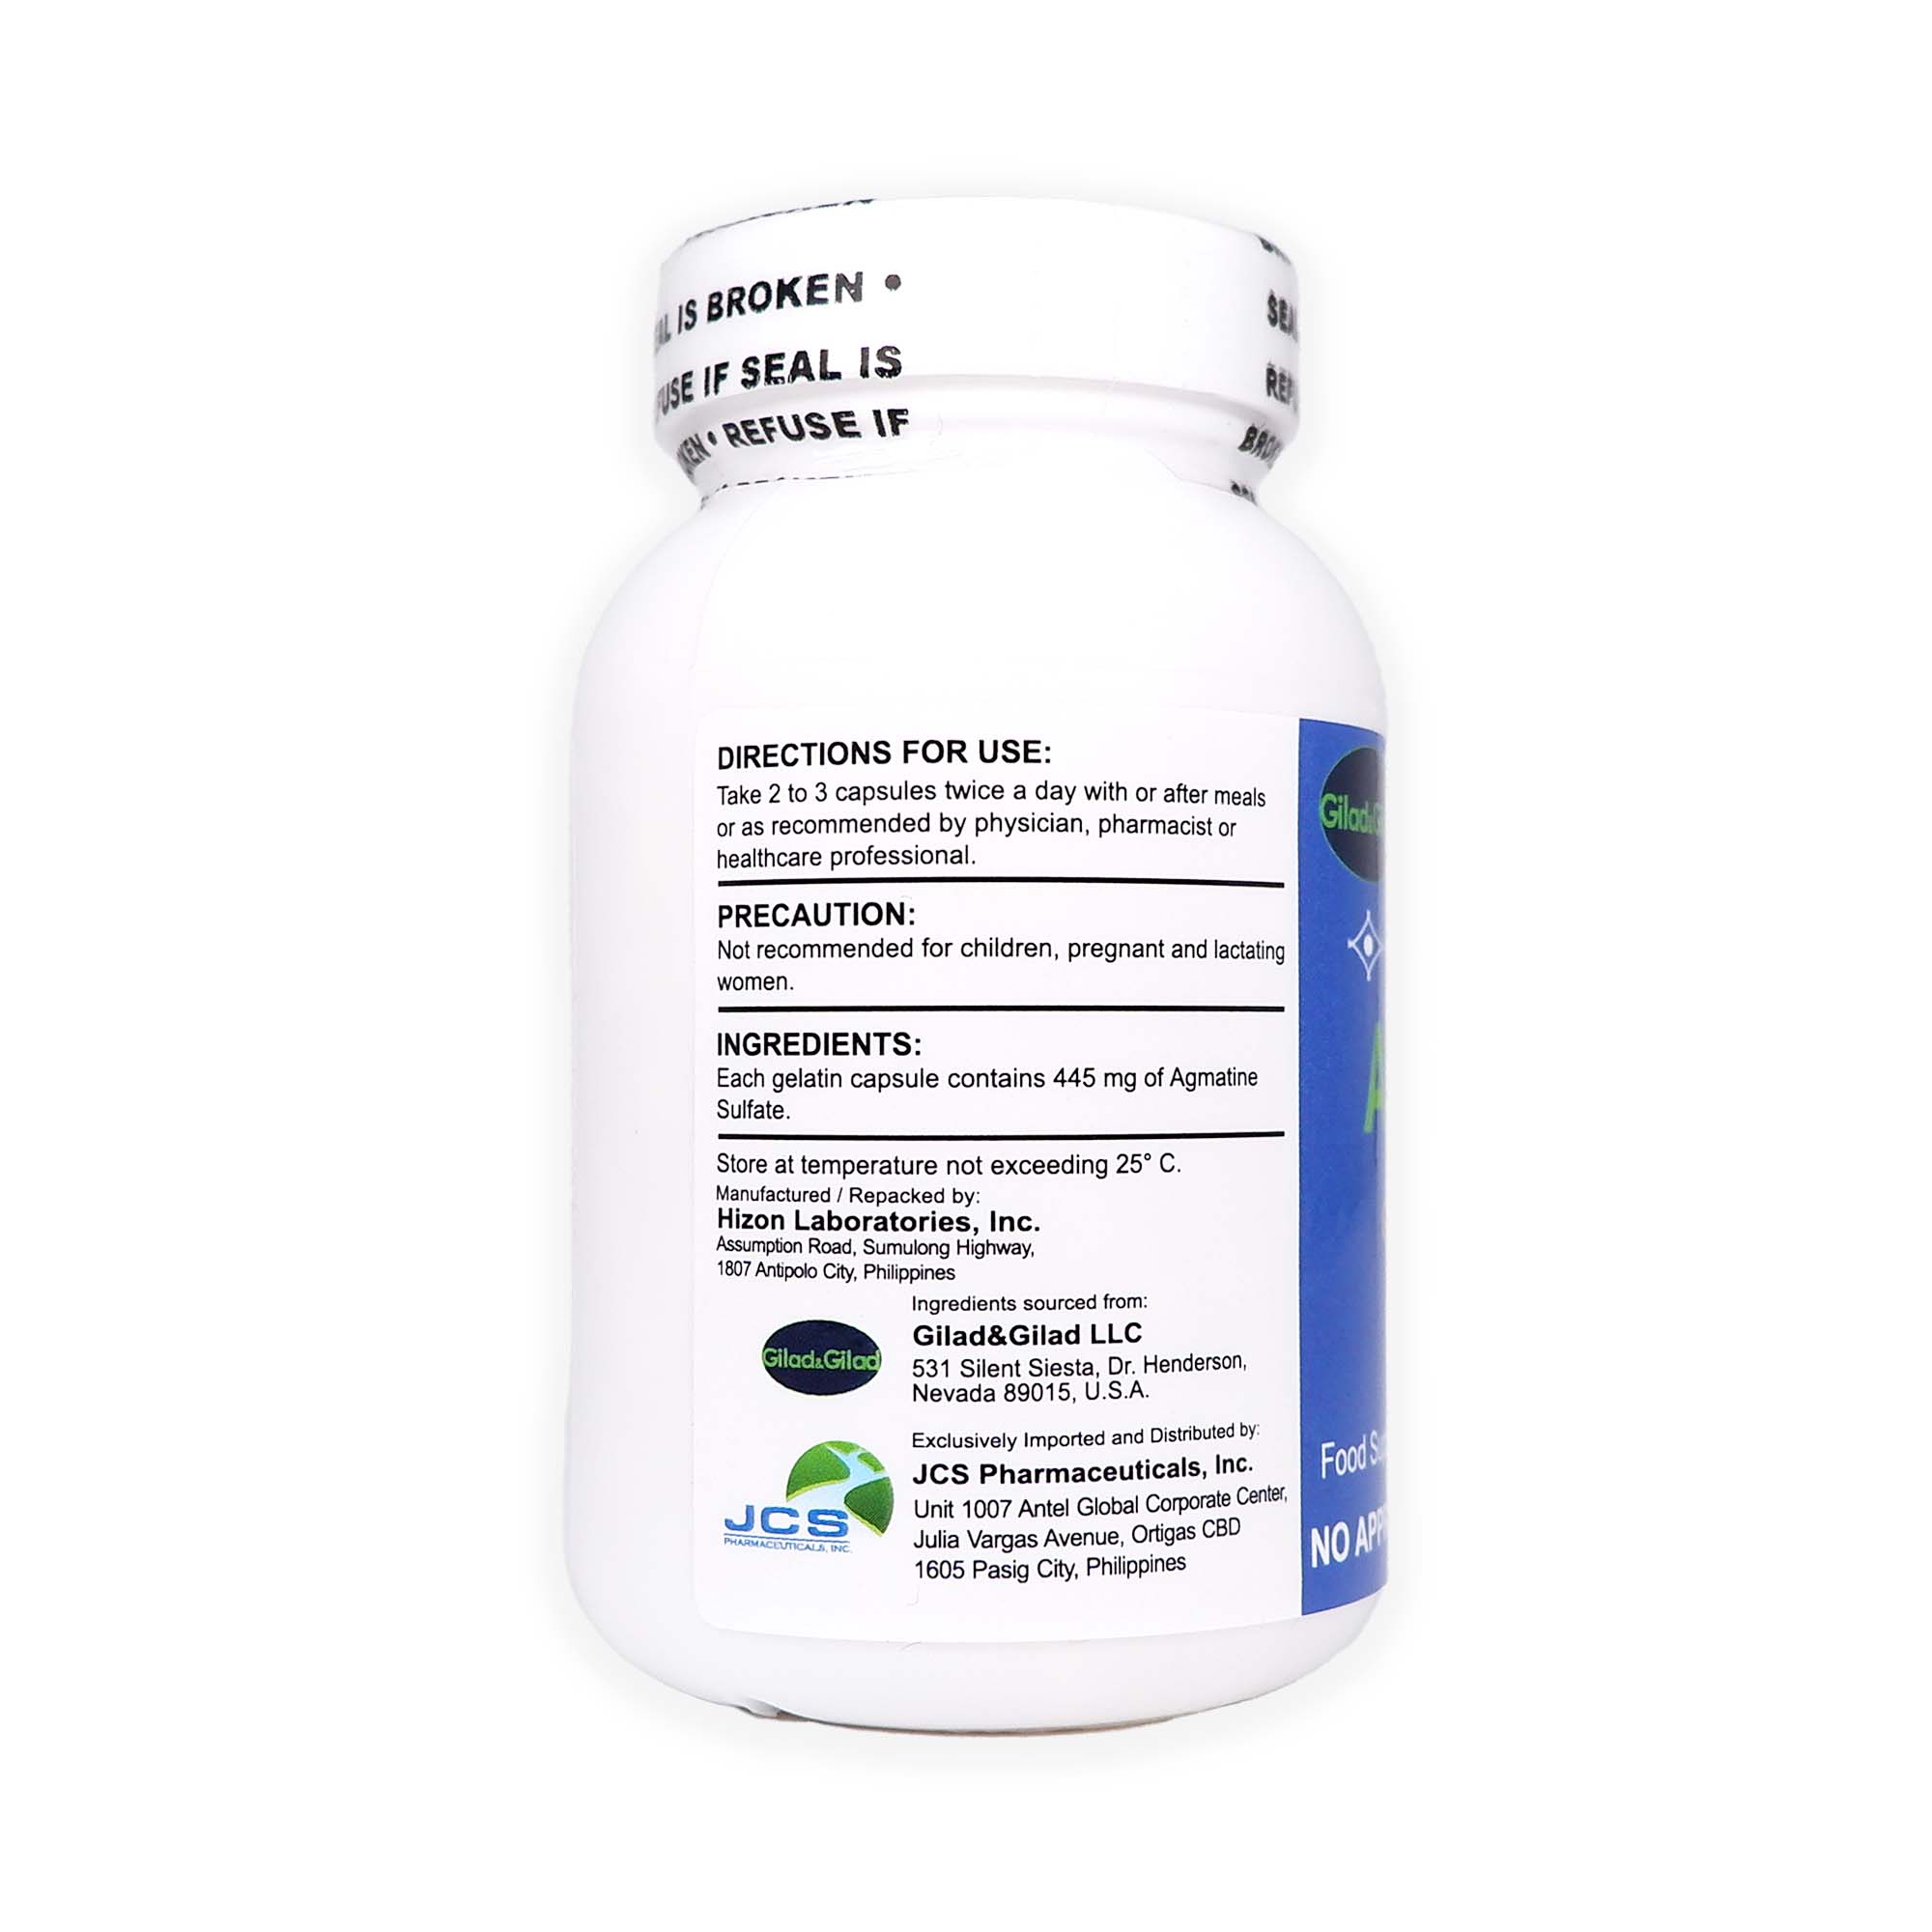 AgmaSet G-Agmatine Sulfate 120 Capsules x 2 Bottles